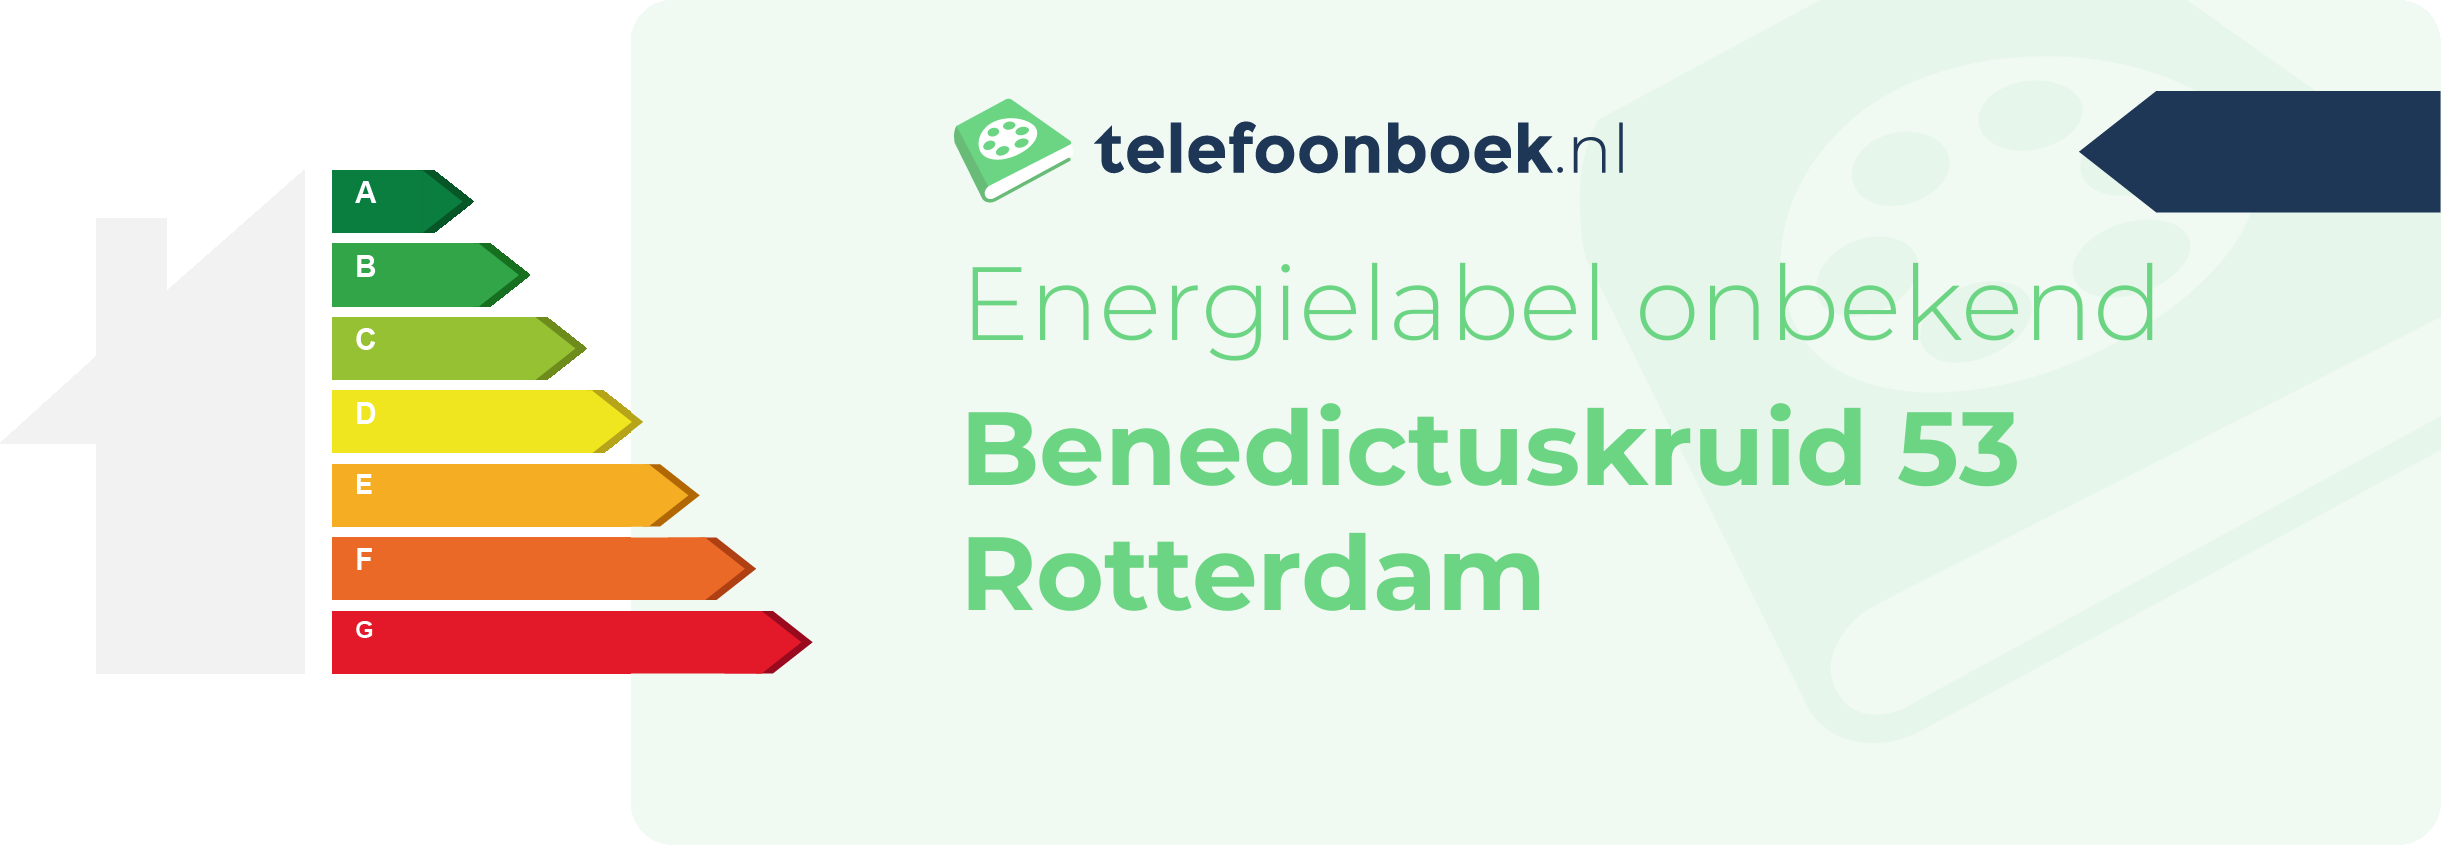 Energielabel Benedictuskruid 53 Rotterdam